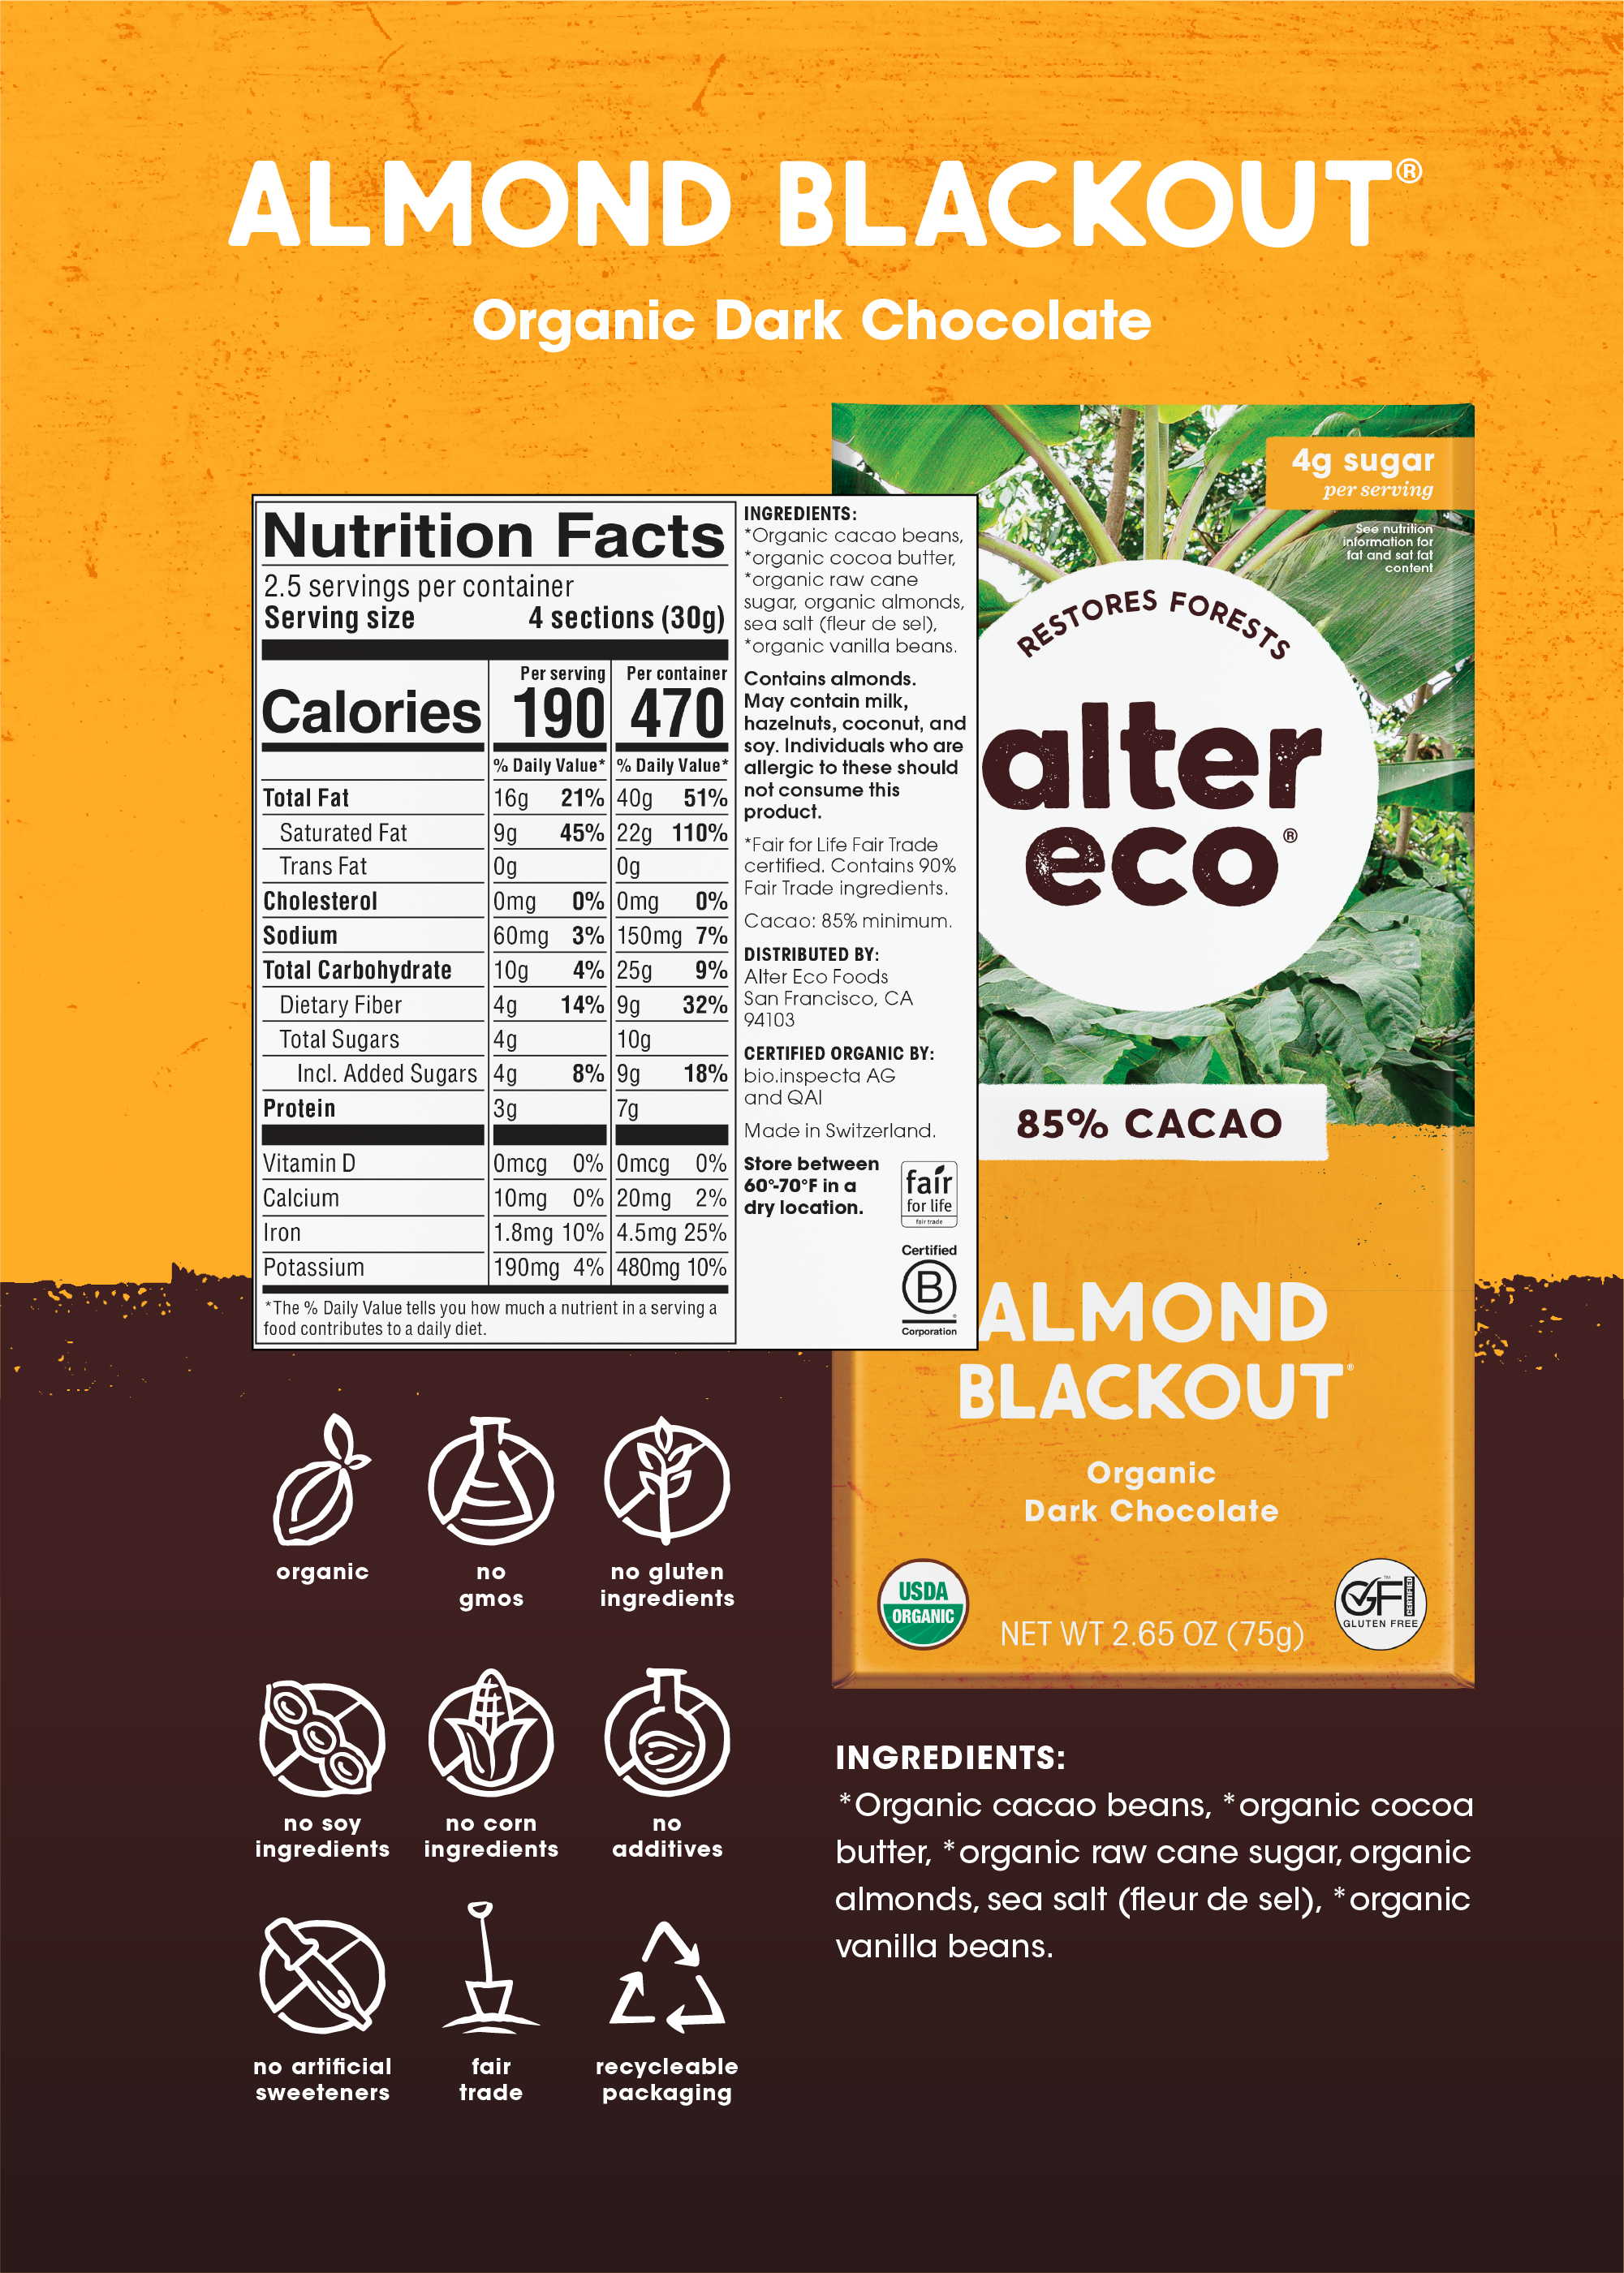 Alter Eco FOREST RESTORING Organic Chocolate Bar-Sea Salt